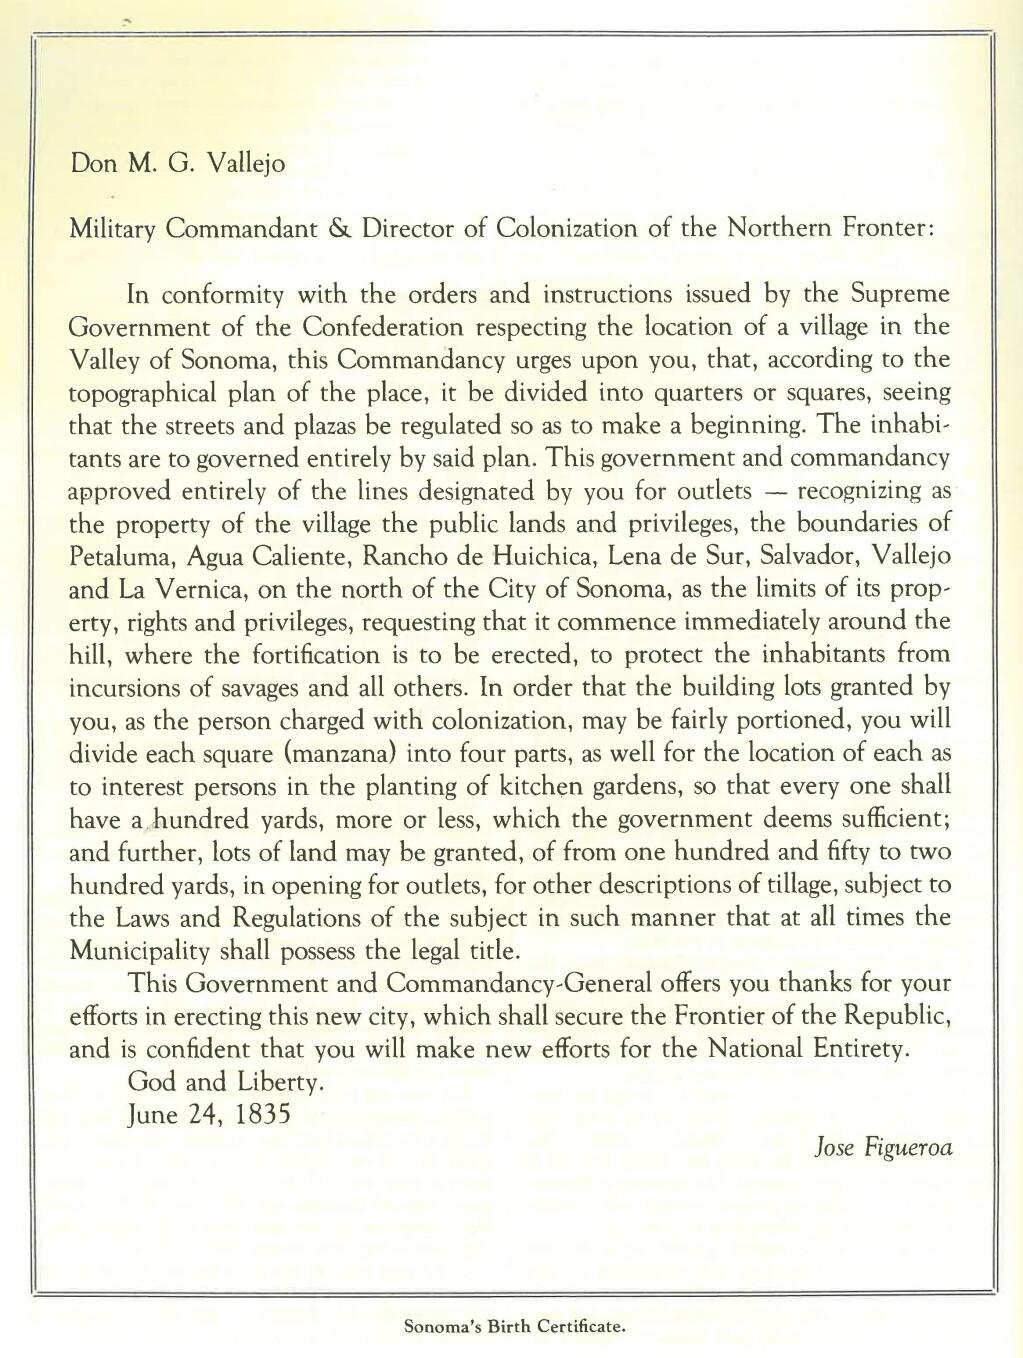 A reprinting of the letter from Jose Figueroa to Vallejo calling for the establishment of Pueblo de Sonoma.